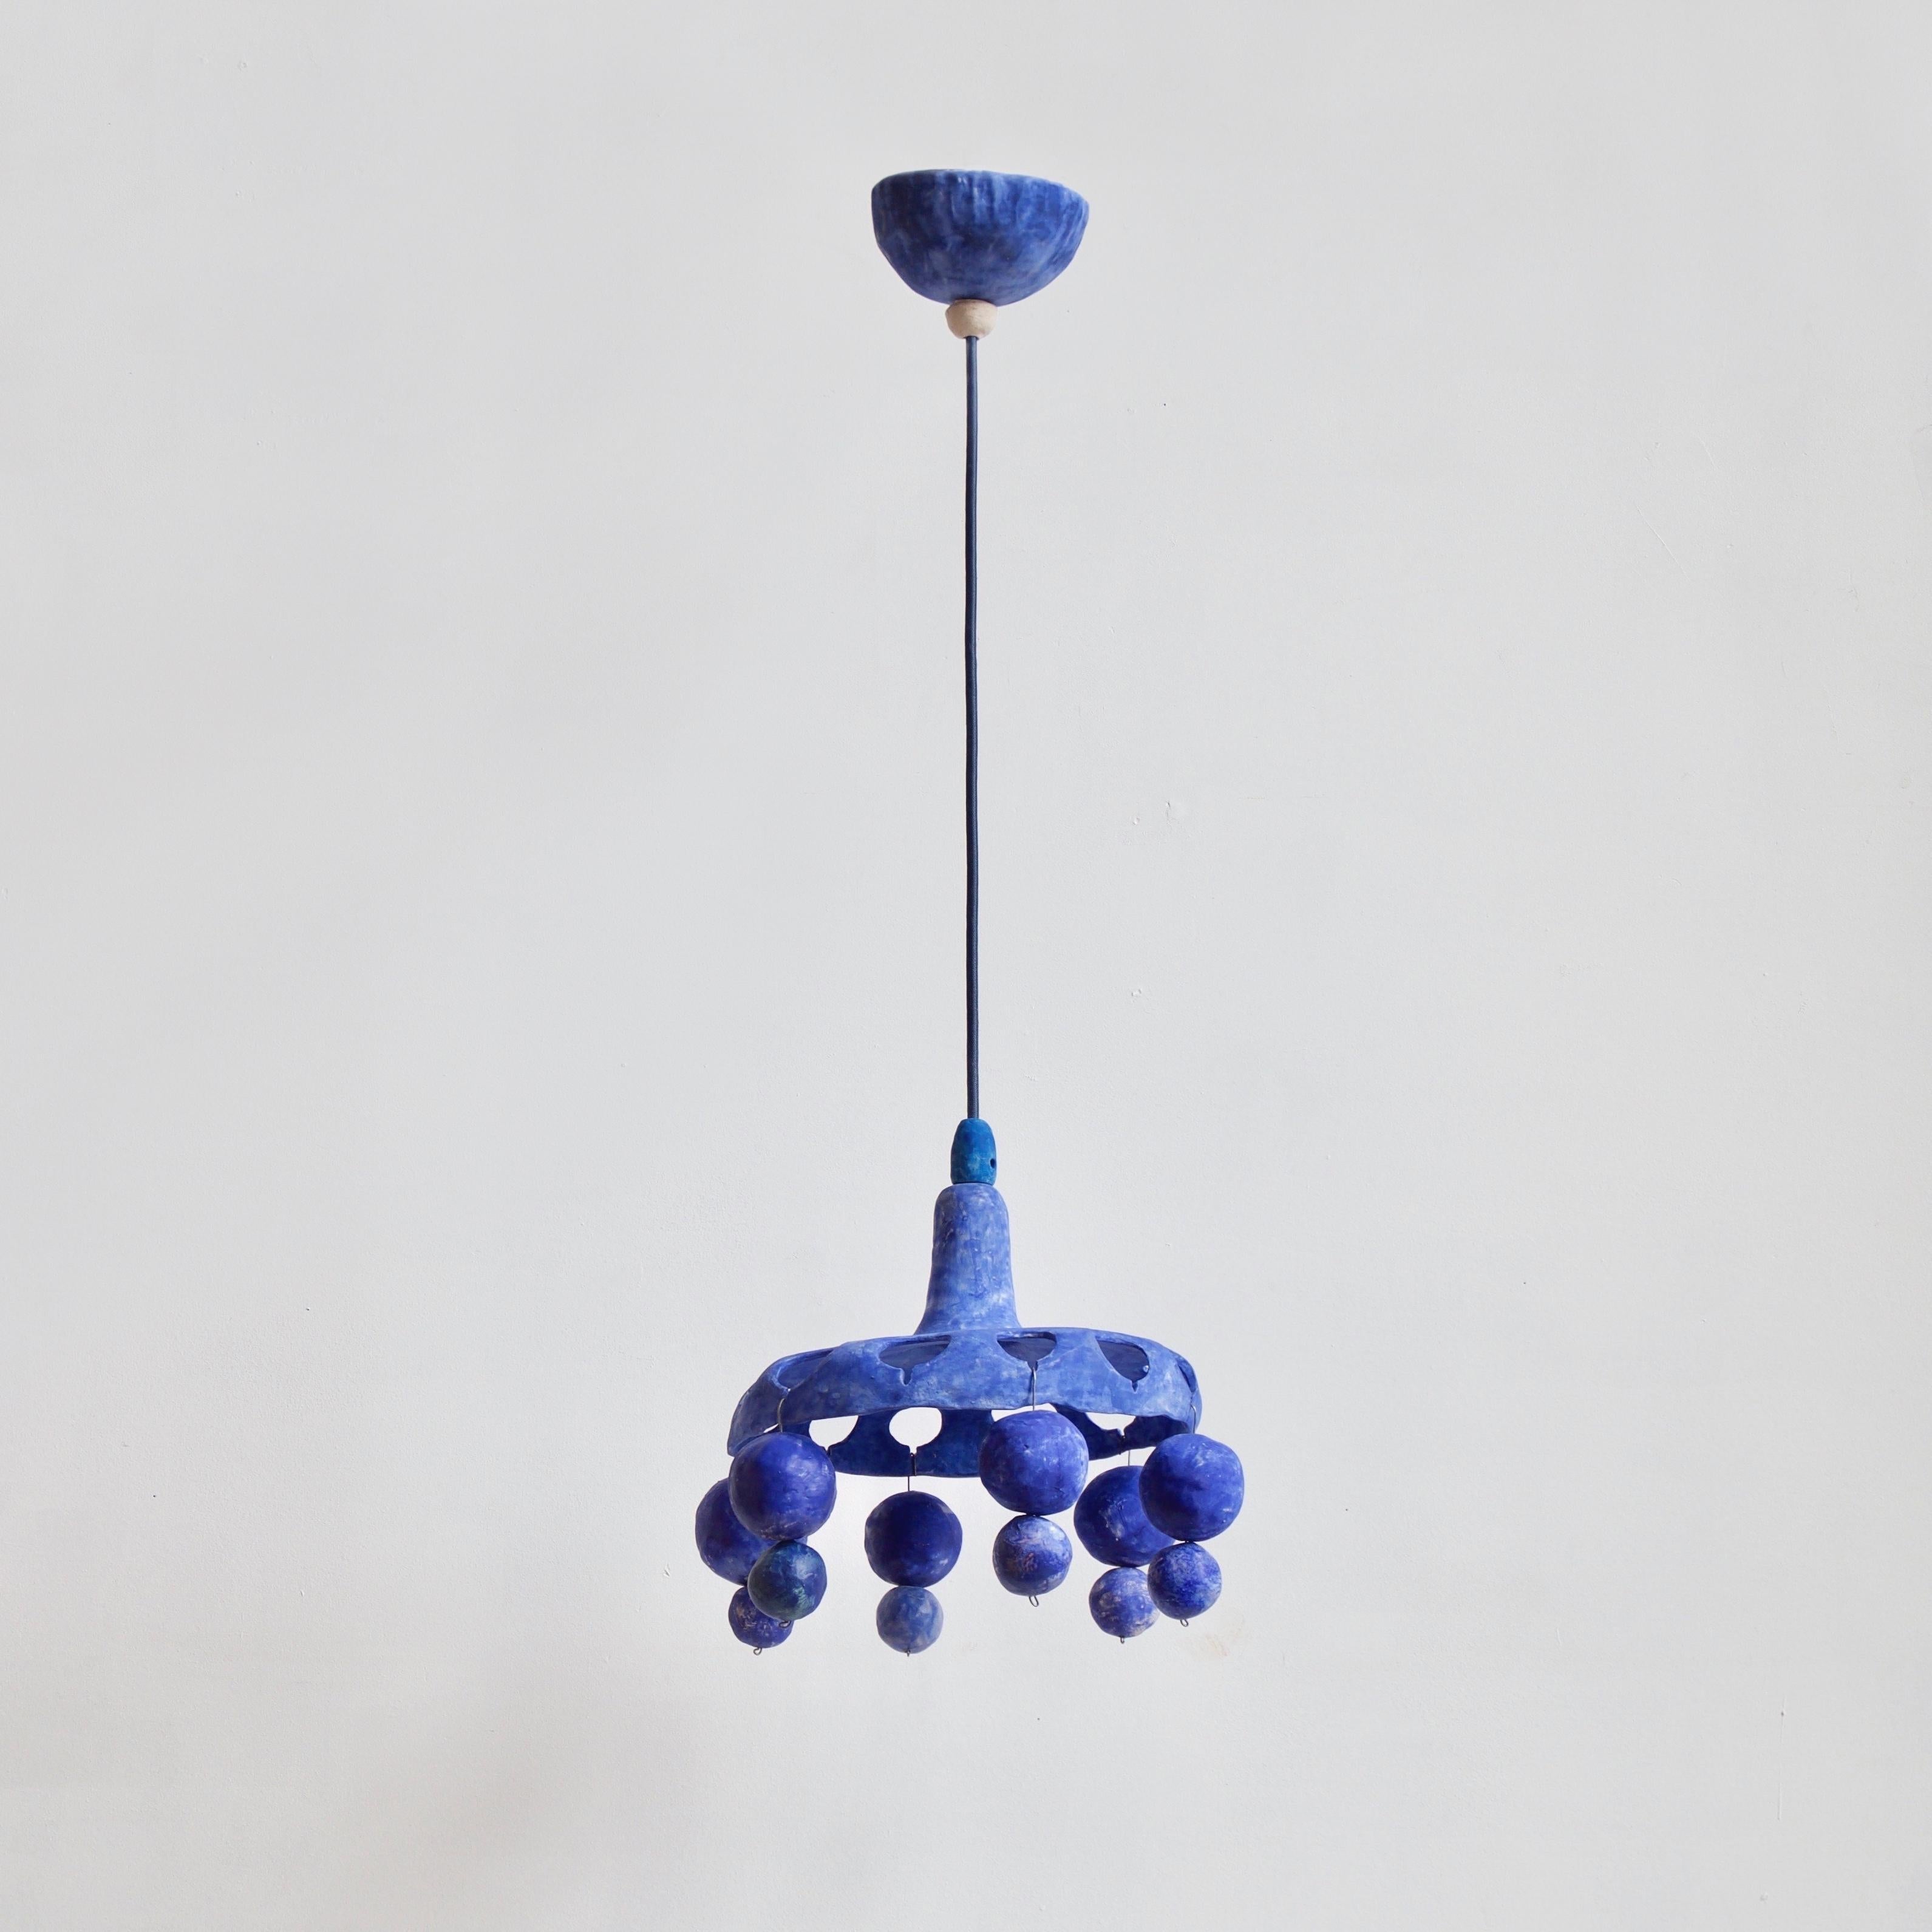 American Courtship Behavior Wee Pendant Lamp, Hand-Built Blue Ceramic by Yuko Nishikawa